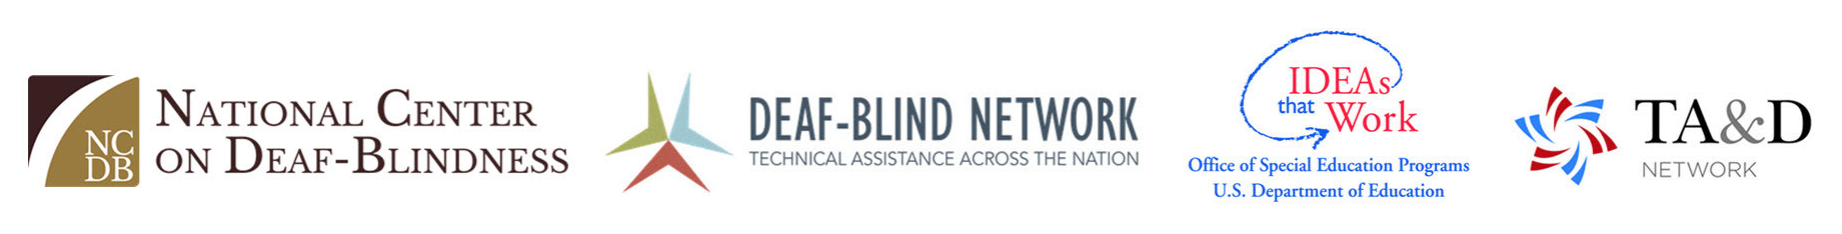 ncdb, deaf-blind network, IDEAs that Work, TA&D network